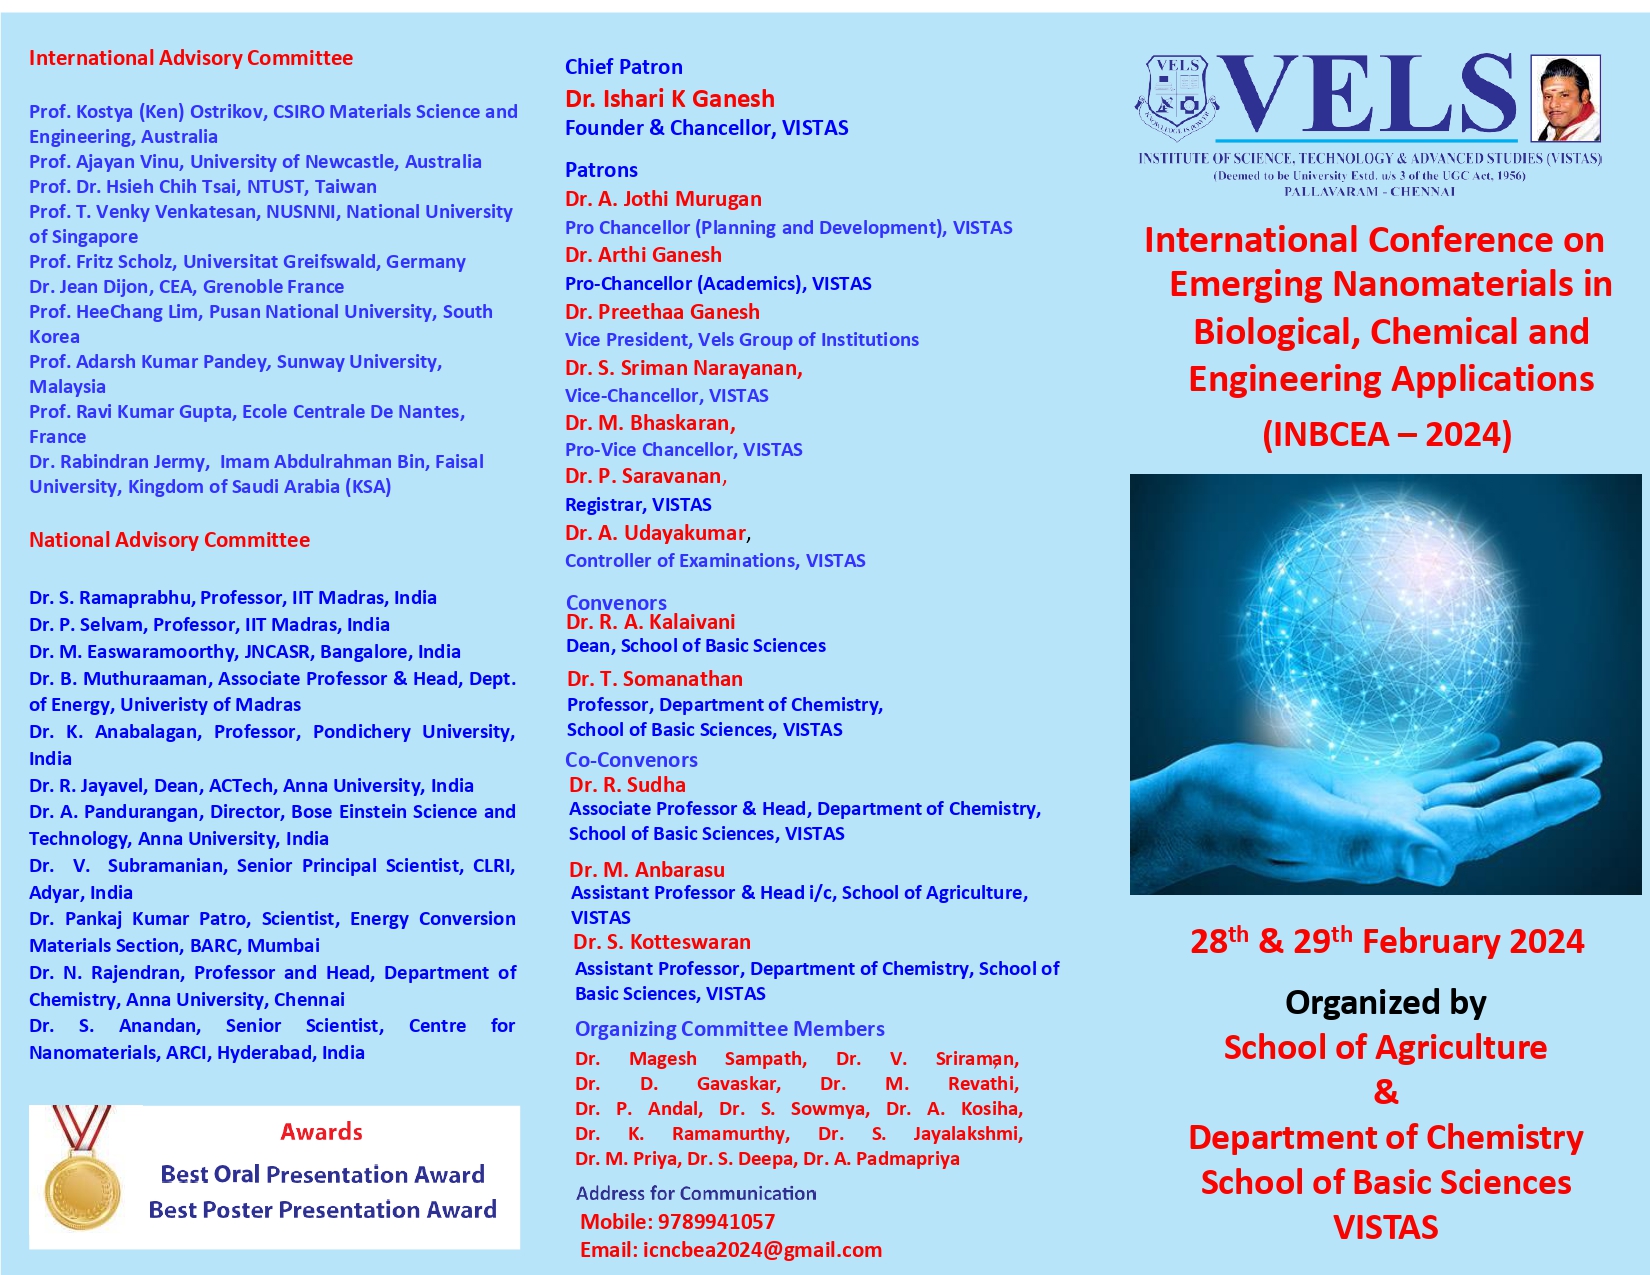 International Conference for INBCEA 2024 Best Deemed University in